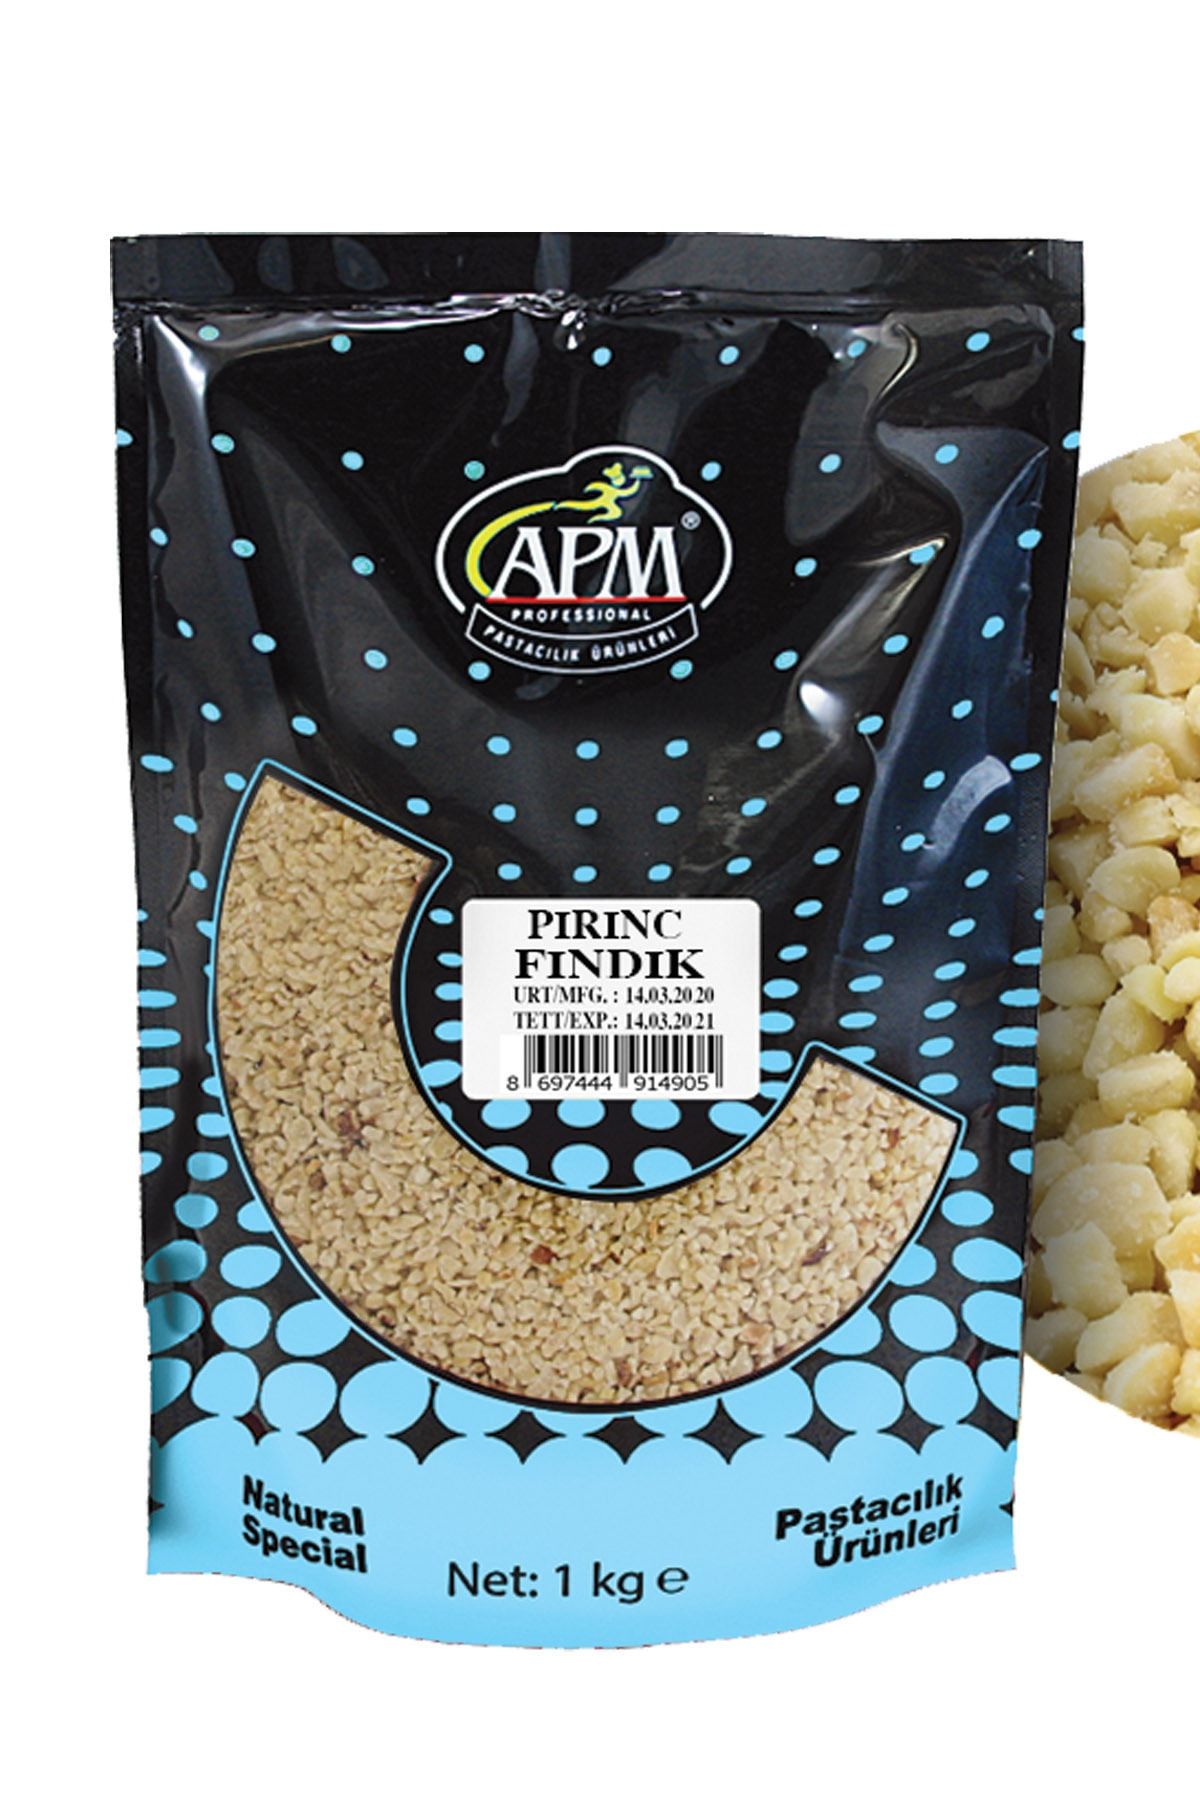 APM Pirinç Fındık Kavrulmuş 1kg